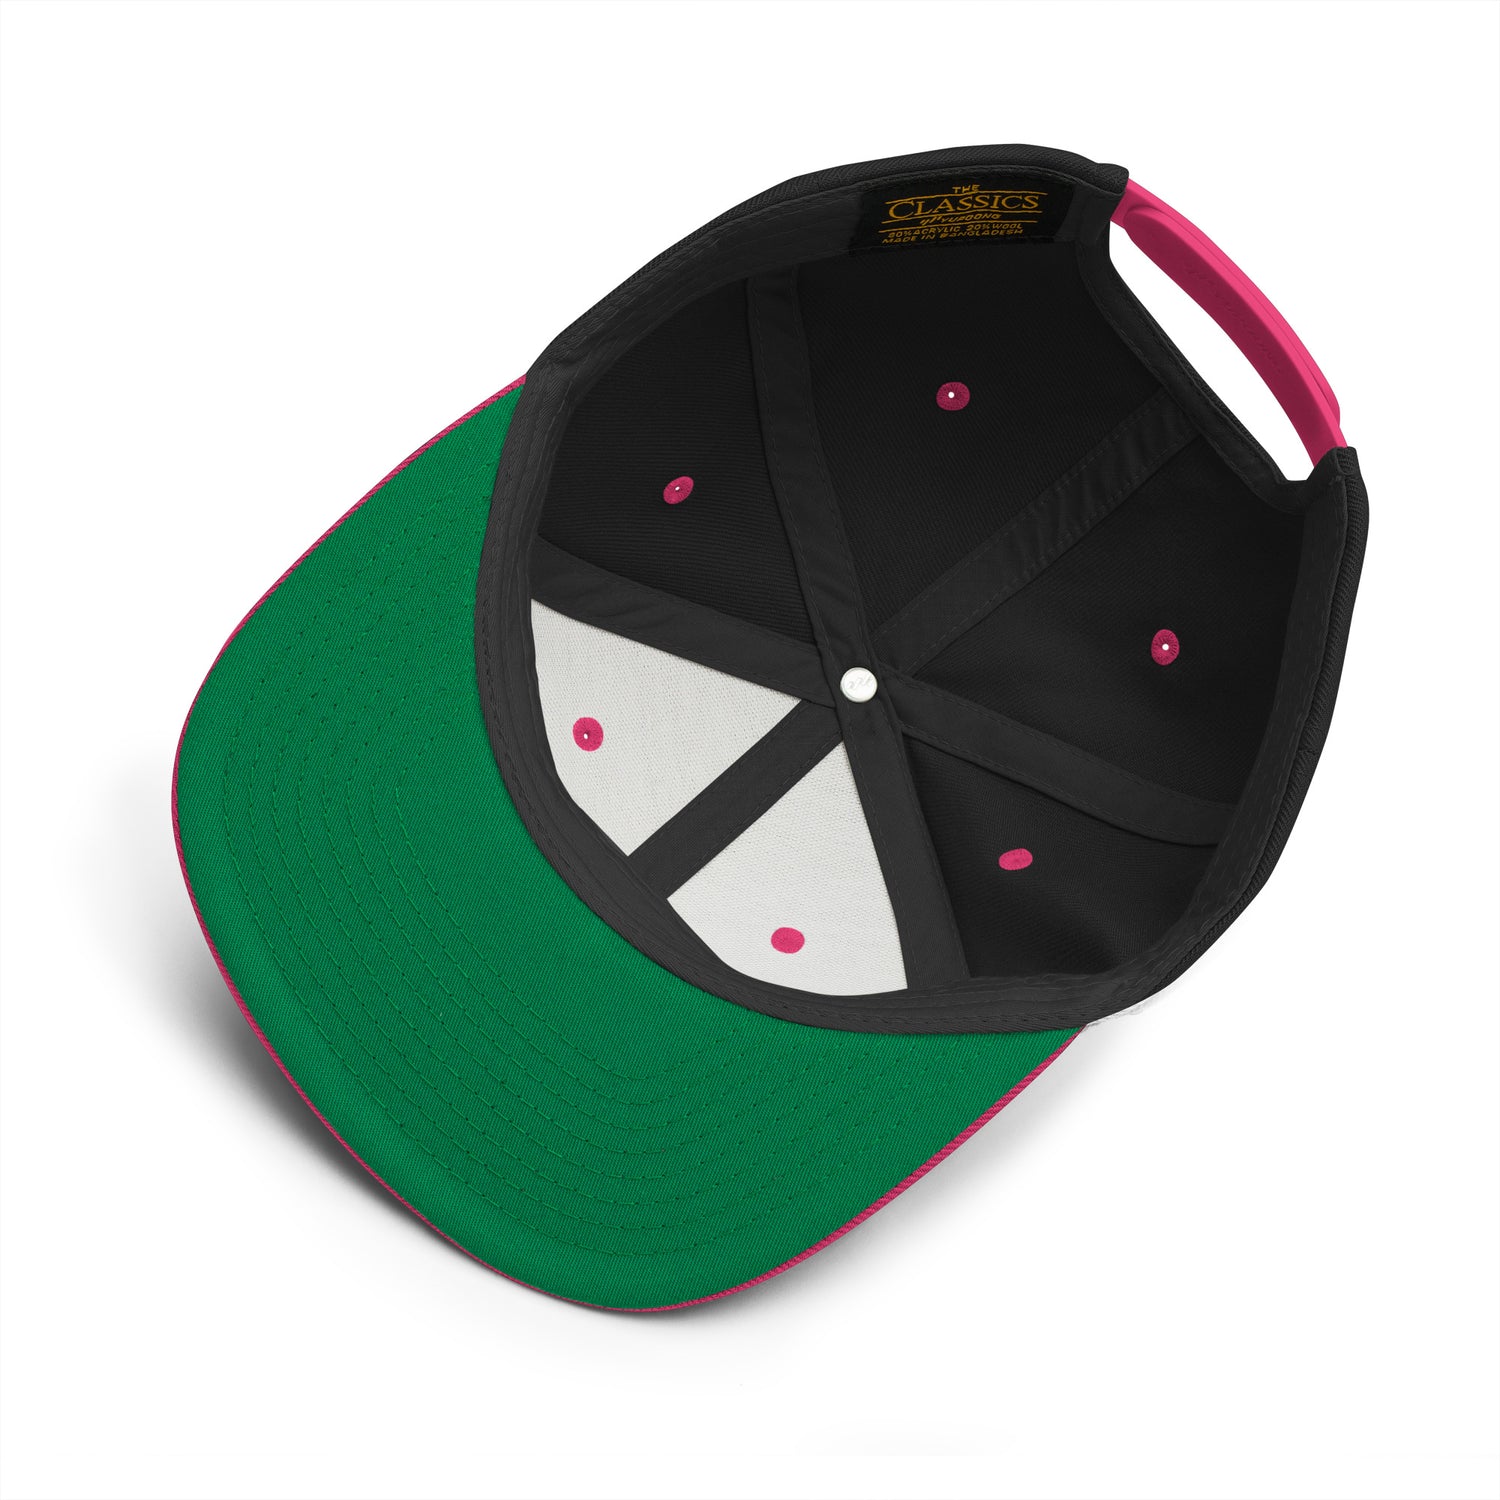 Black & Pink Snapback Hat – Hummus Fit